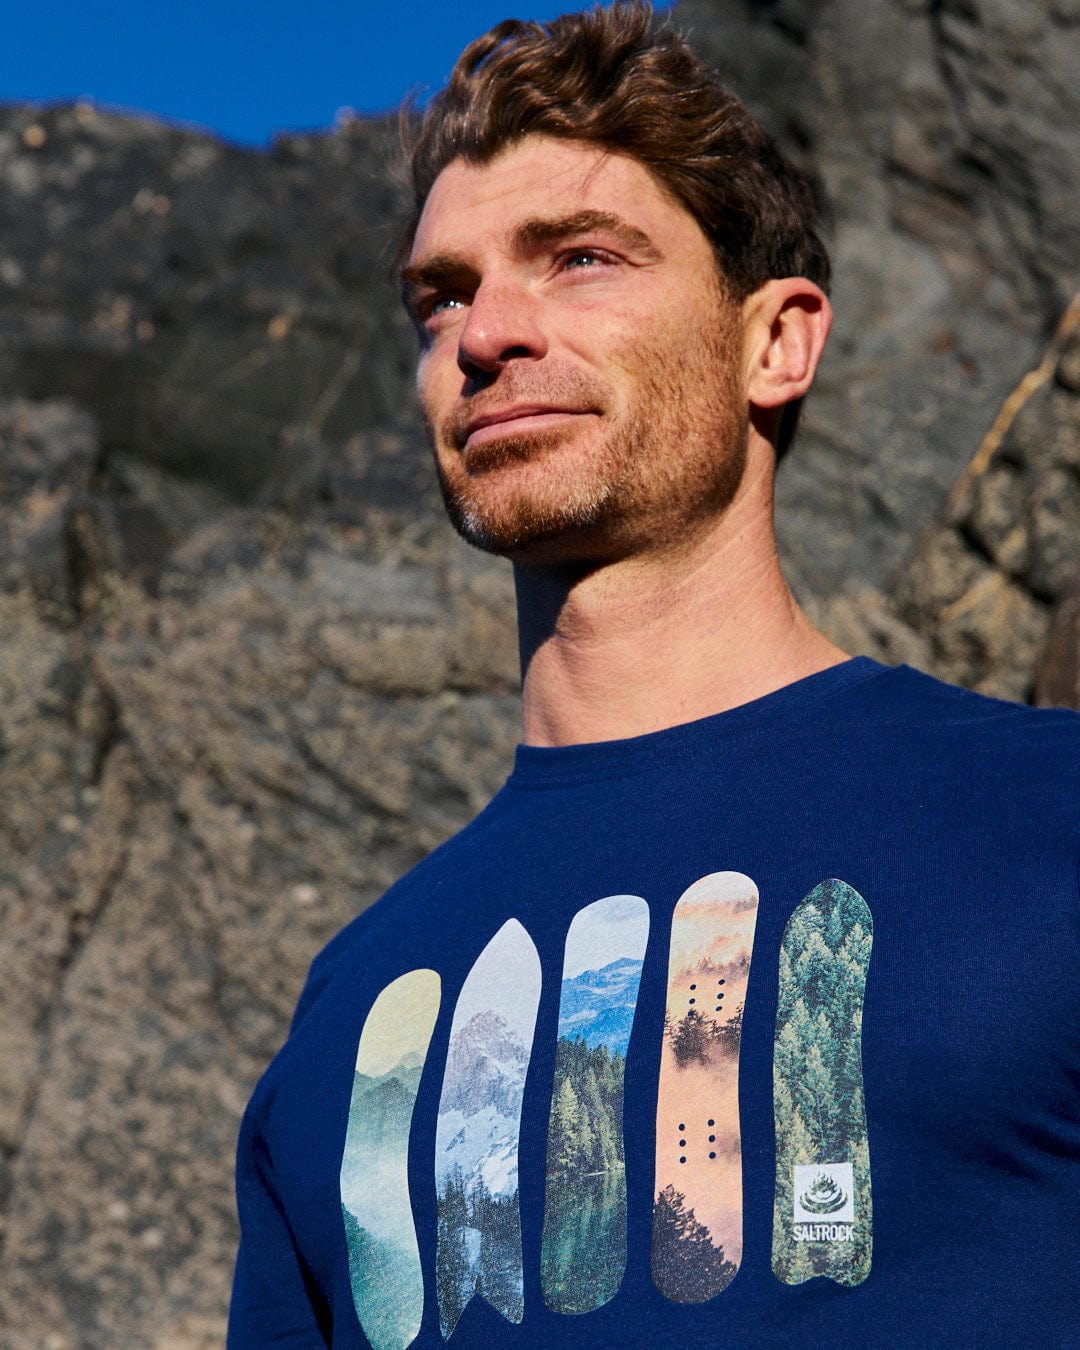 A man wearing a Saltrock Snowboards - Mens Short Sleeve T-Shirt - Blue standing in front of rocks.